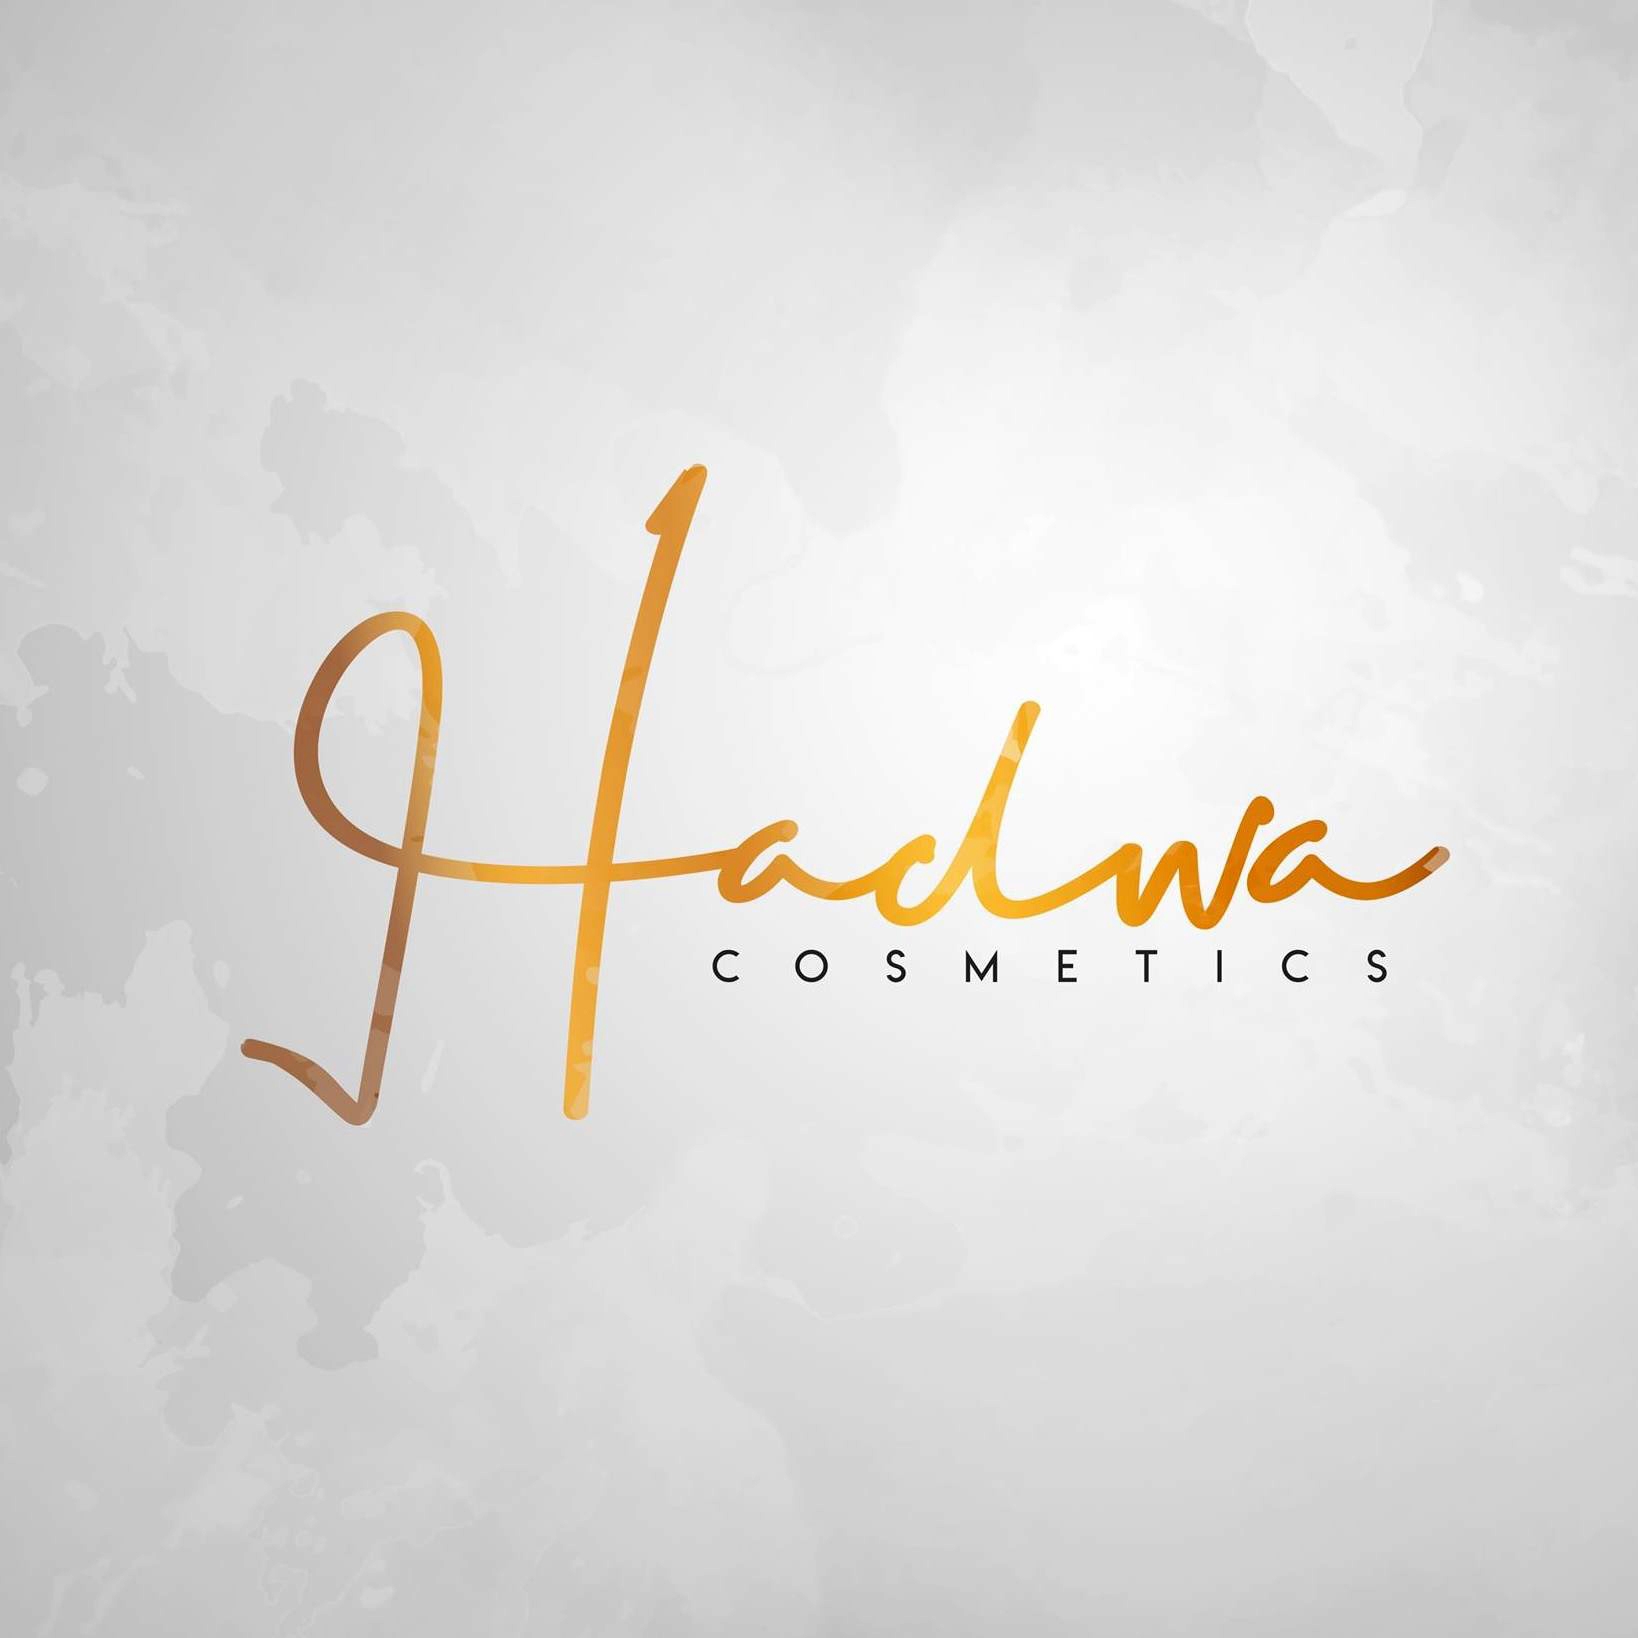 Hadwa Cosmetics